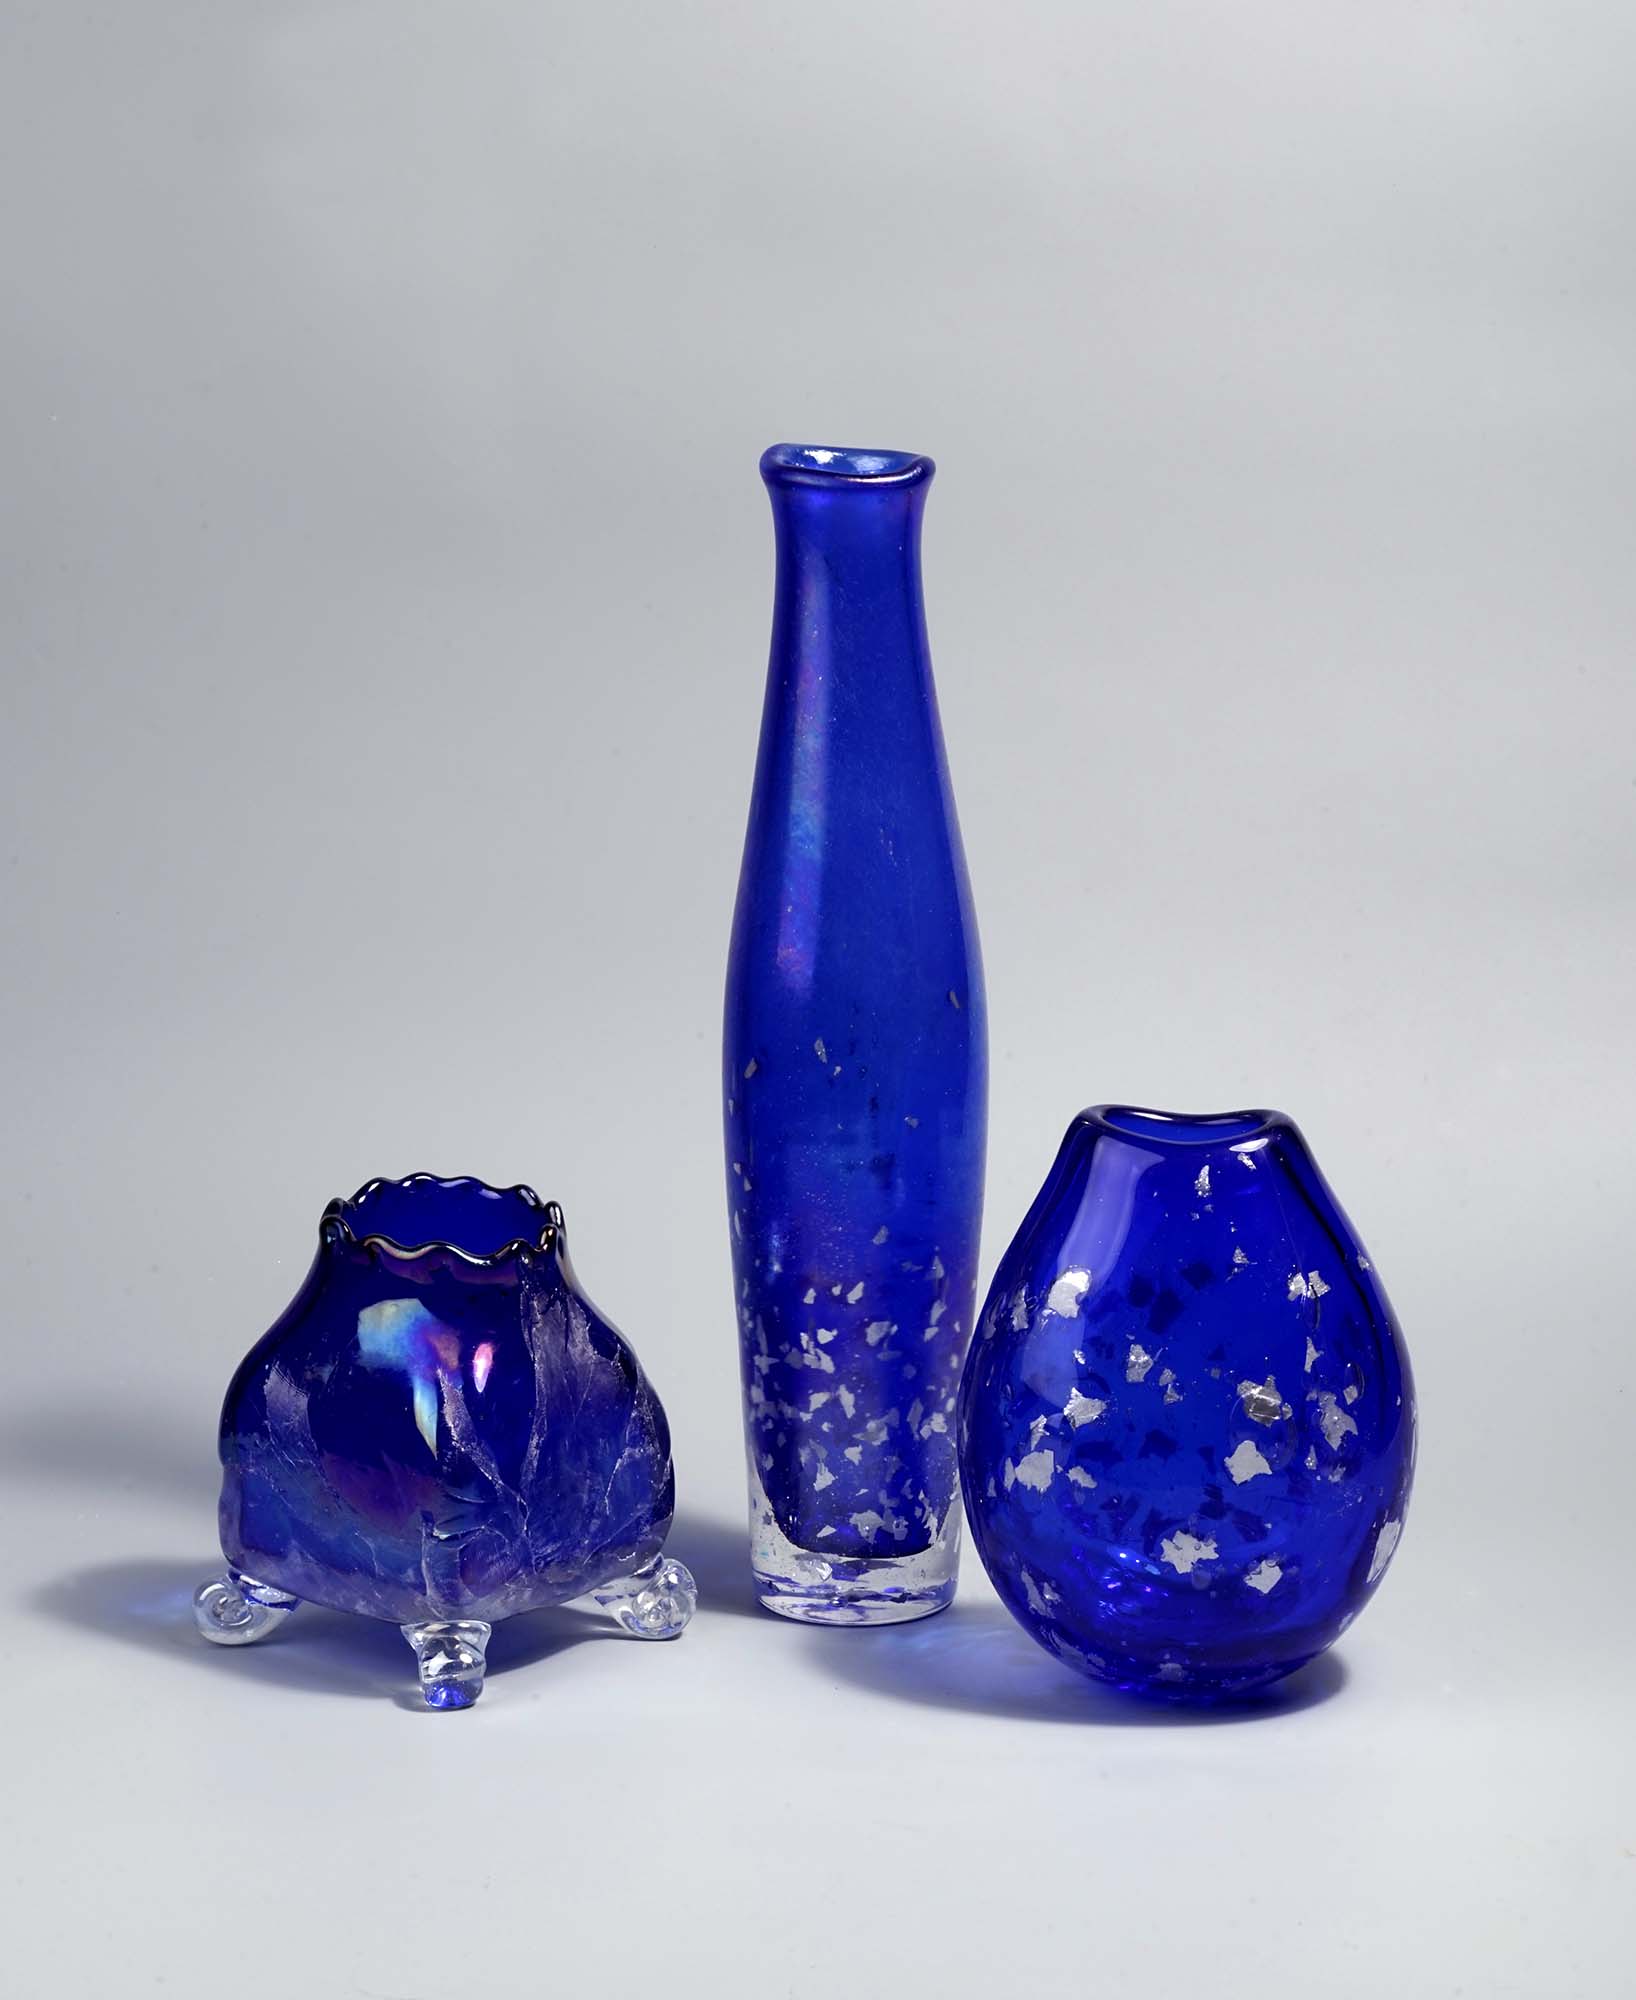 Blue vase 1, 2, 3